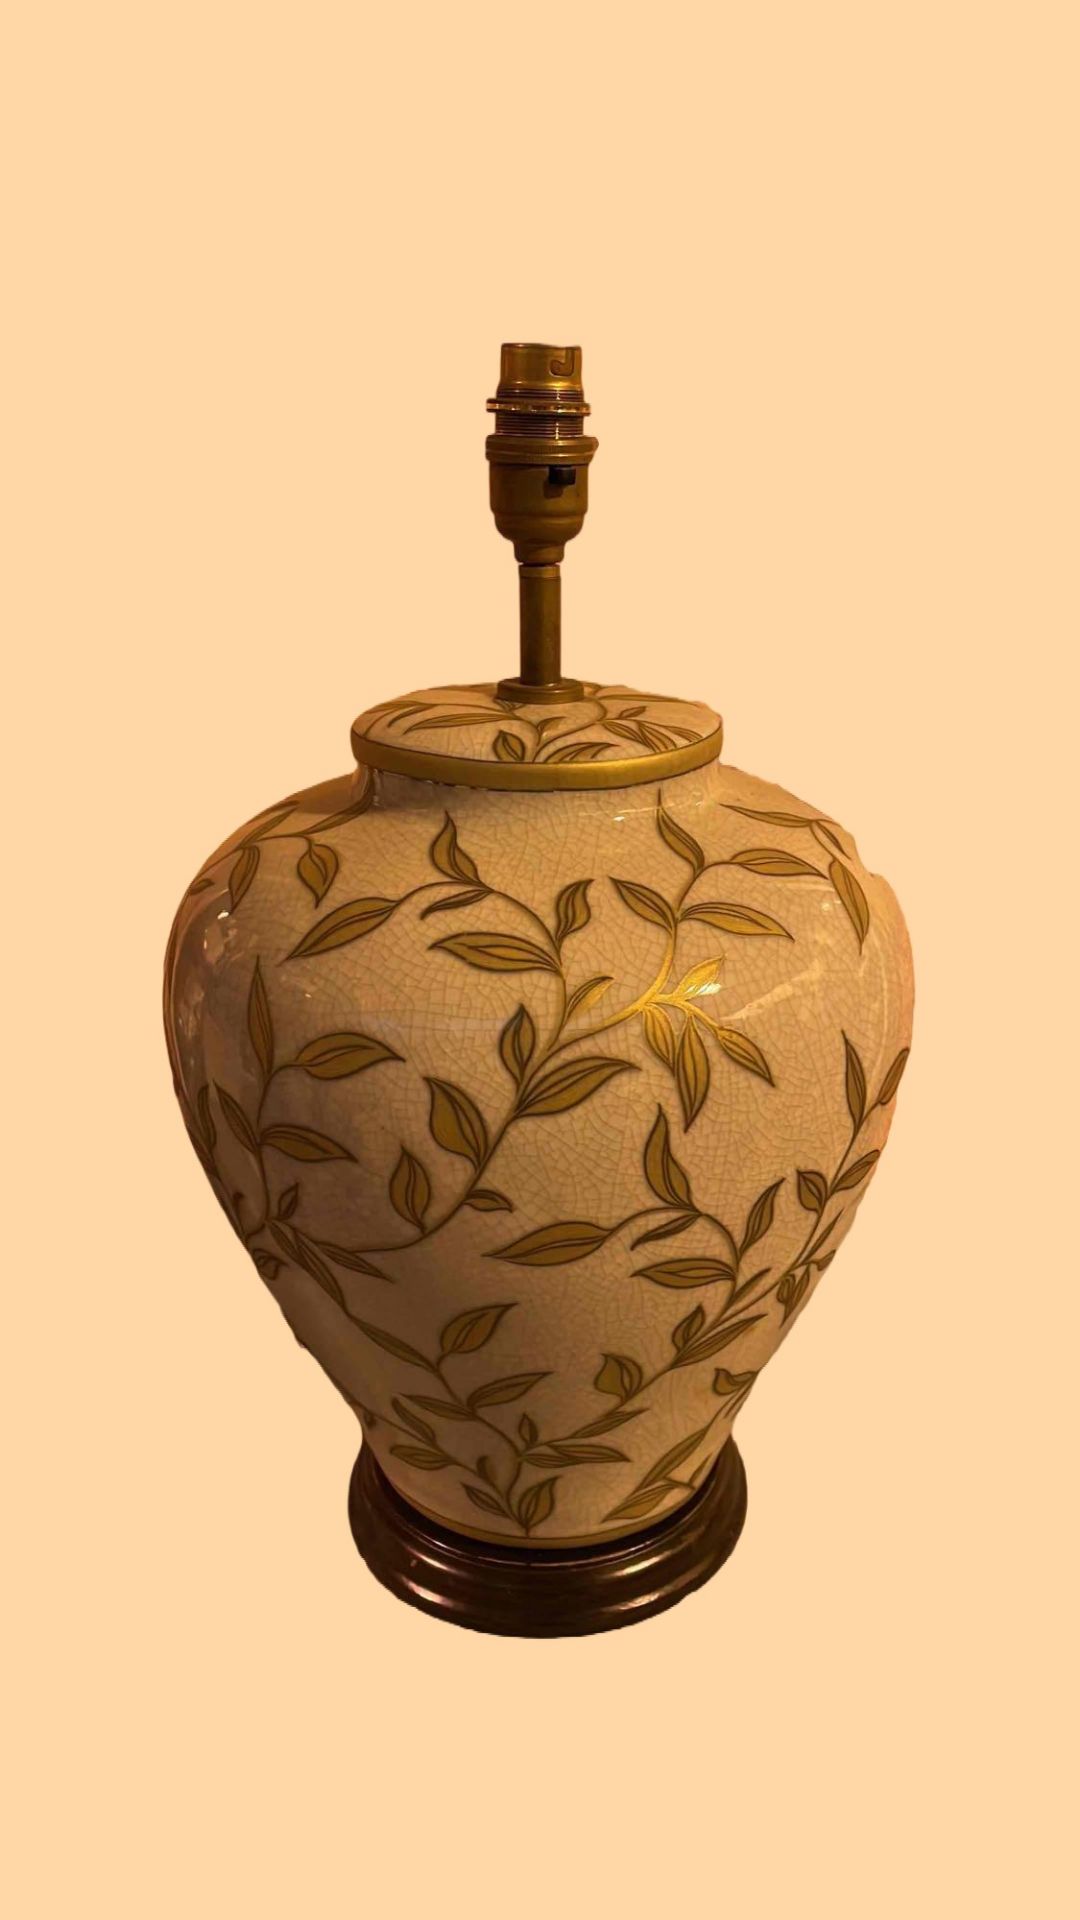 Metrol Lighting, Crackle Glaze Ceramic Lamp Decorative Vase Form With A Gold Swirl Leaf Pattern 40cm